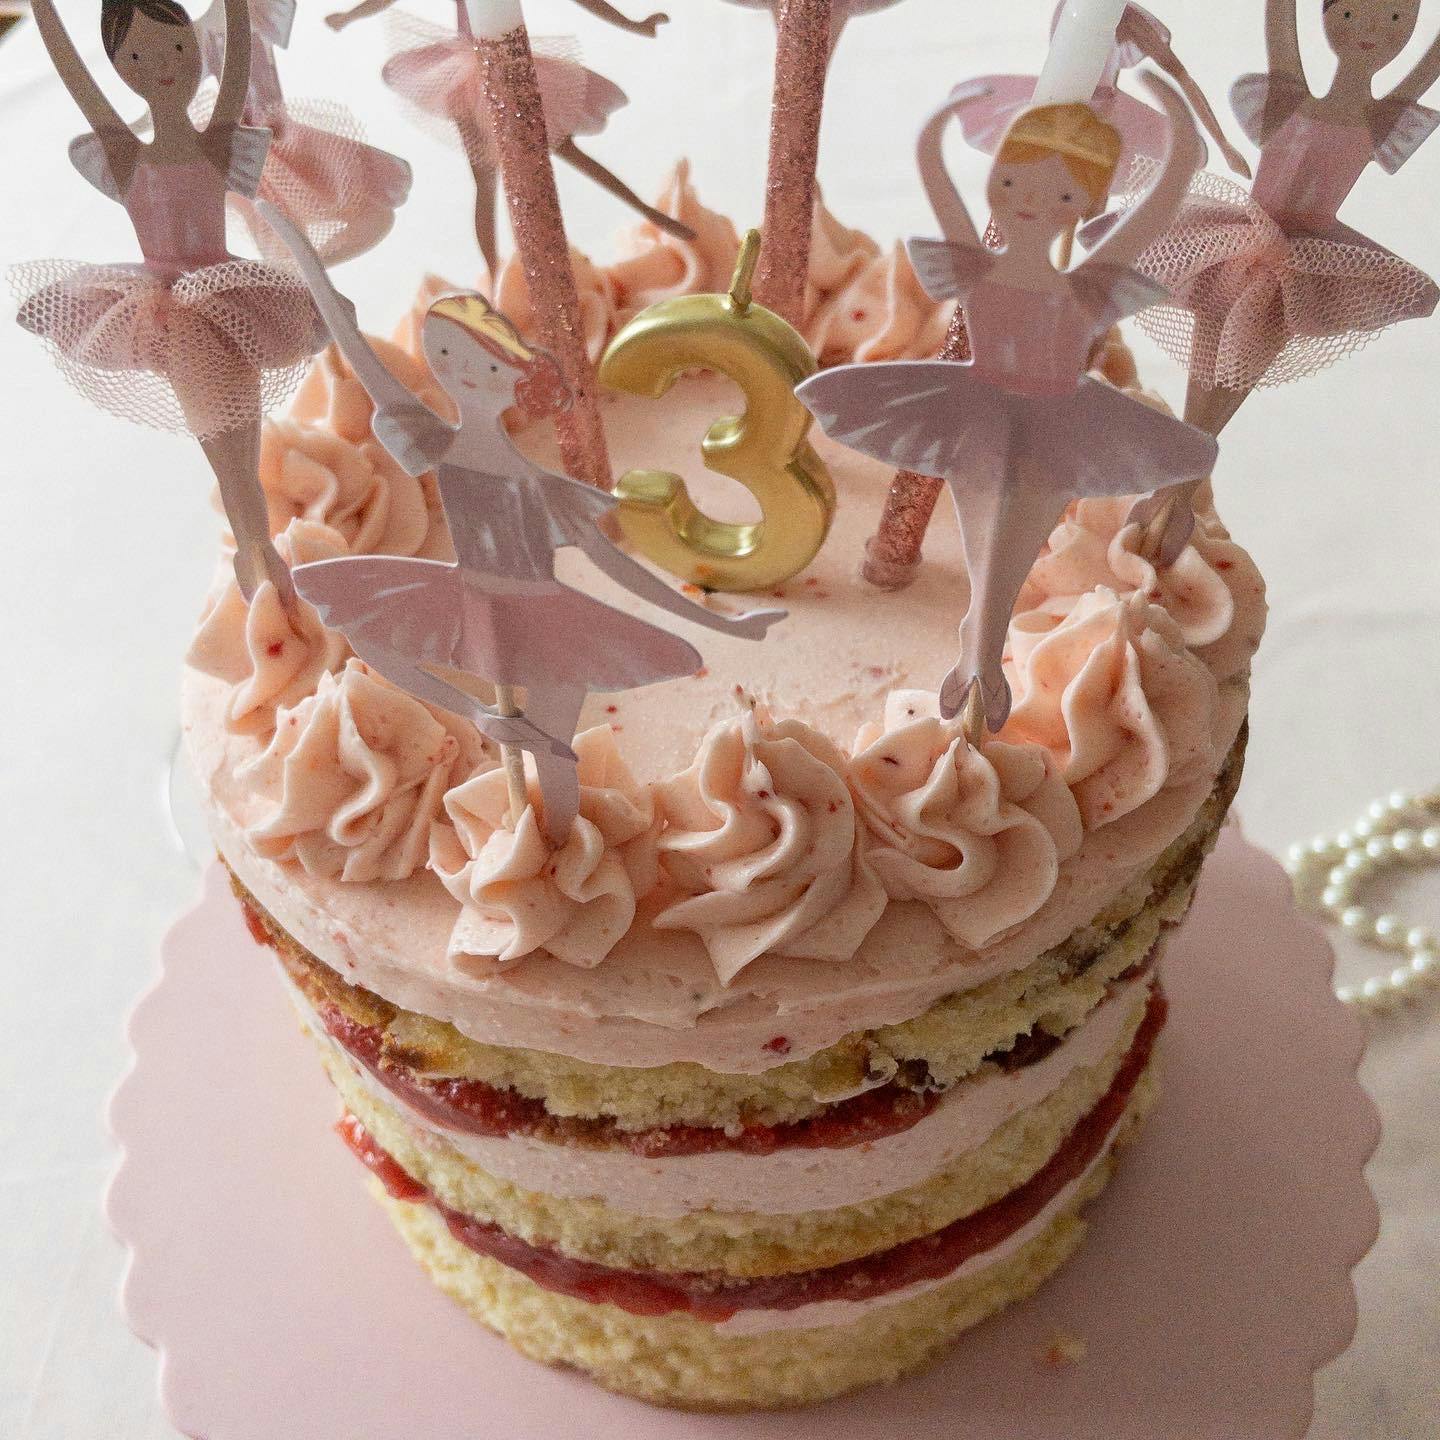 9” layer cake